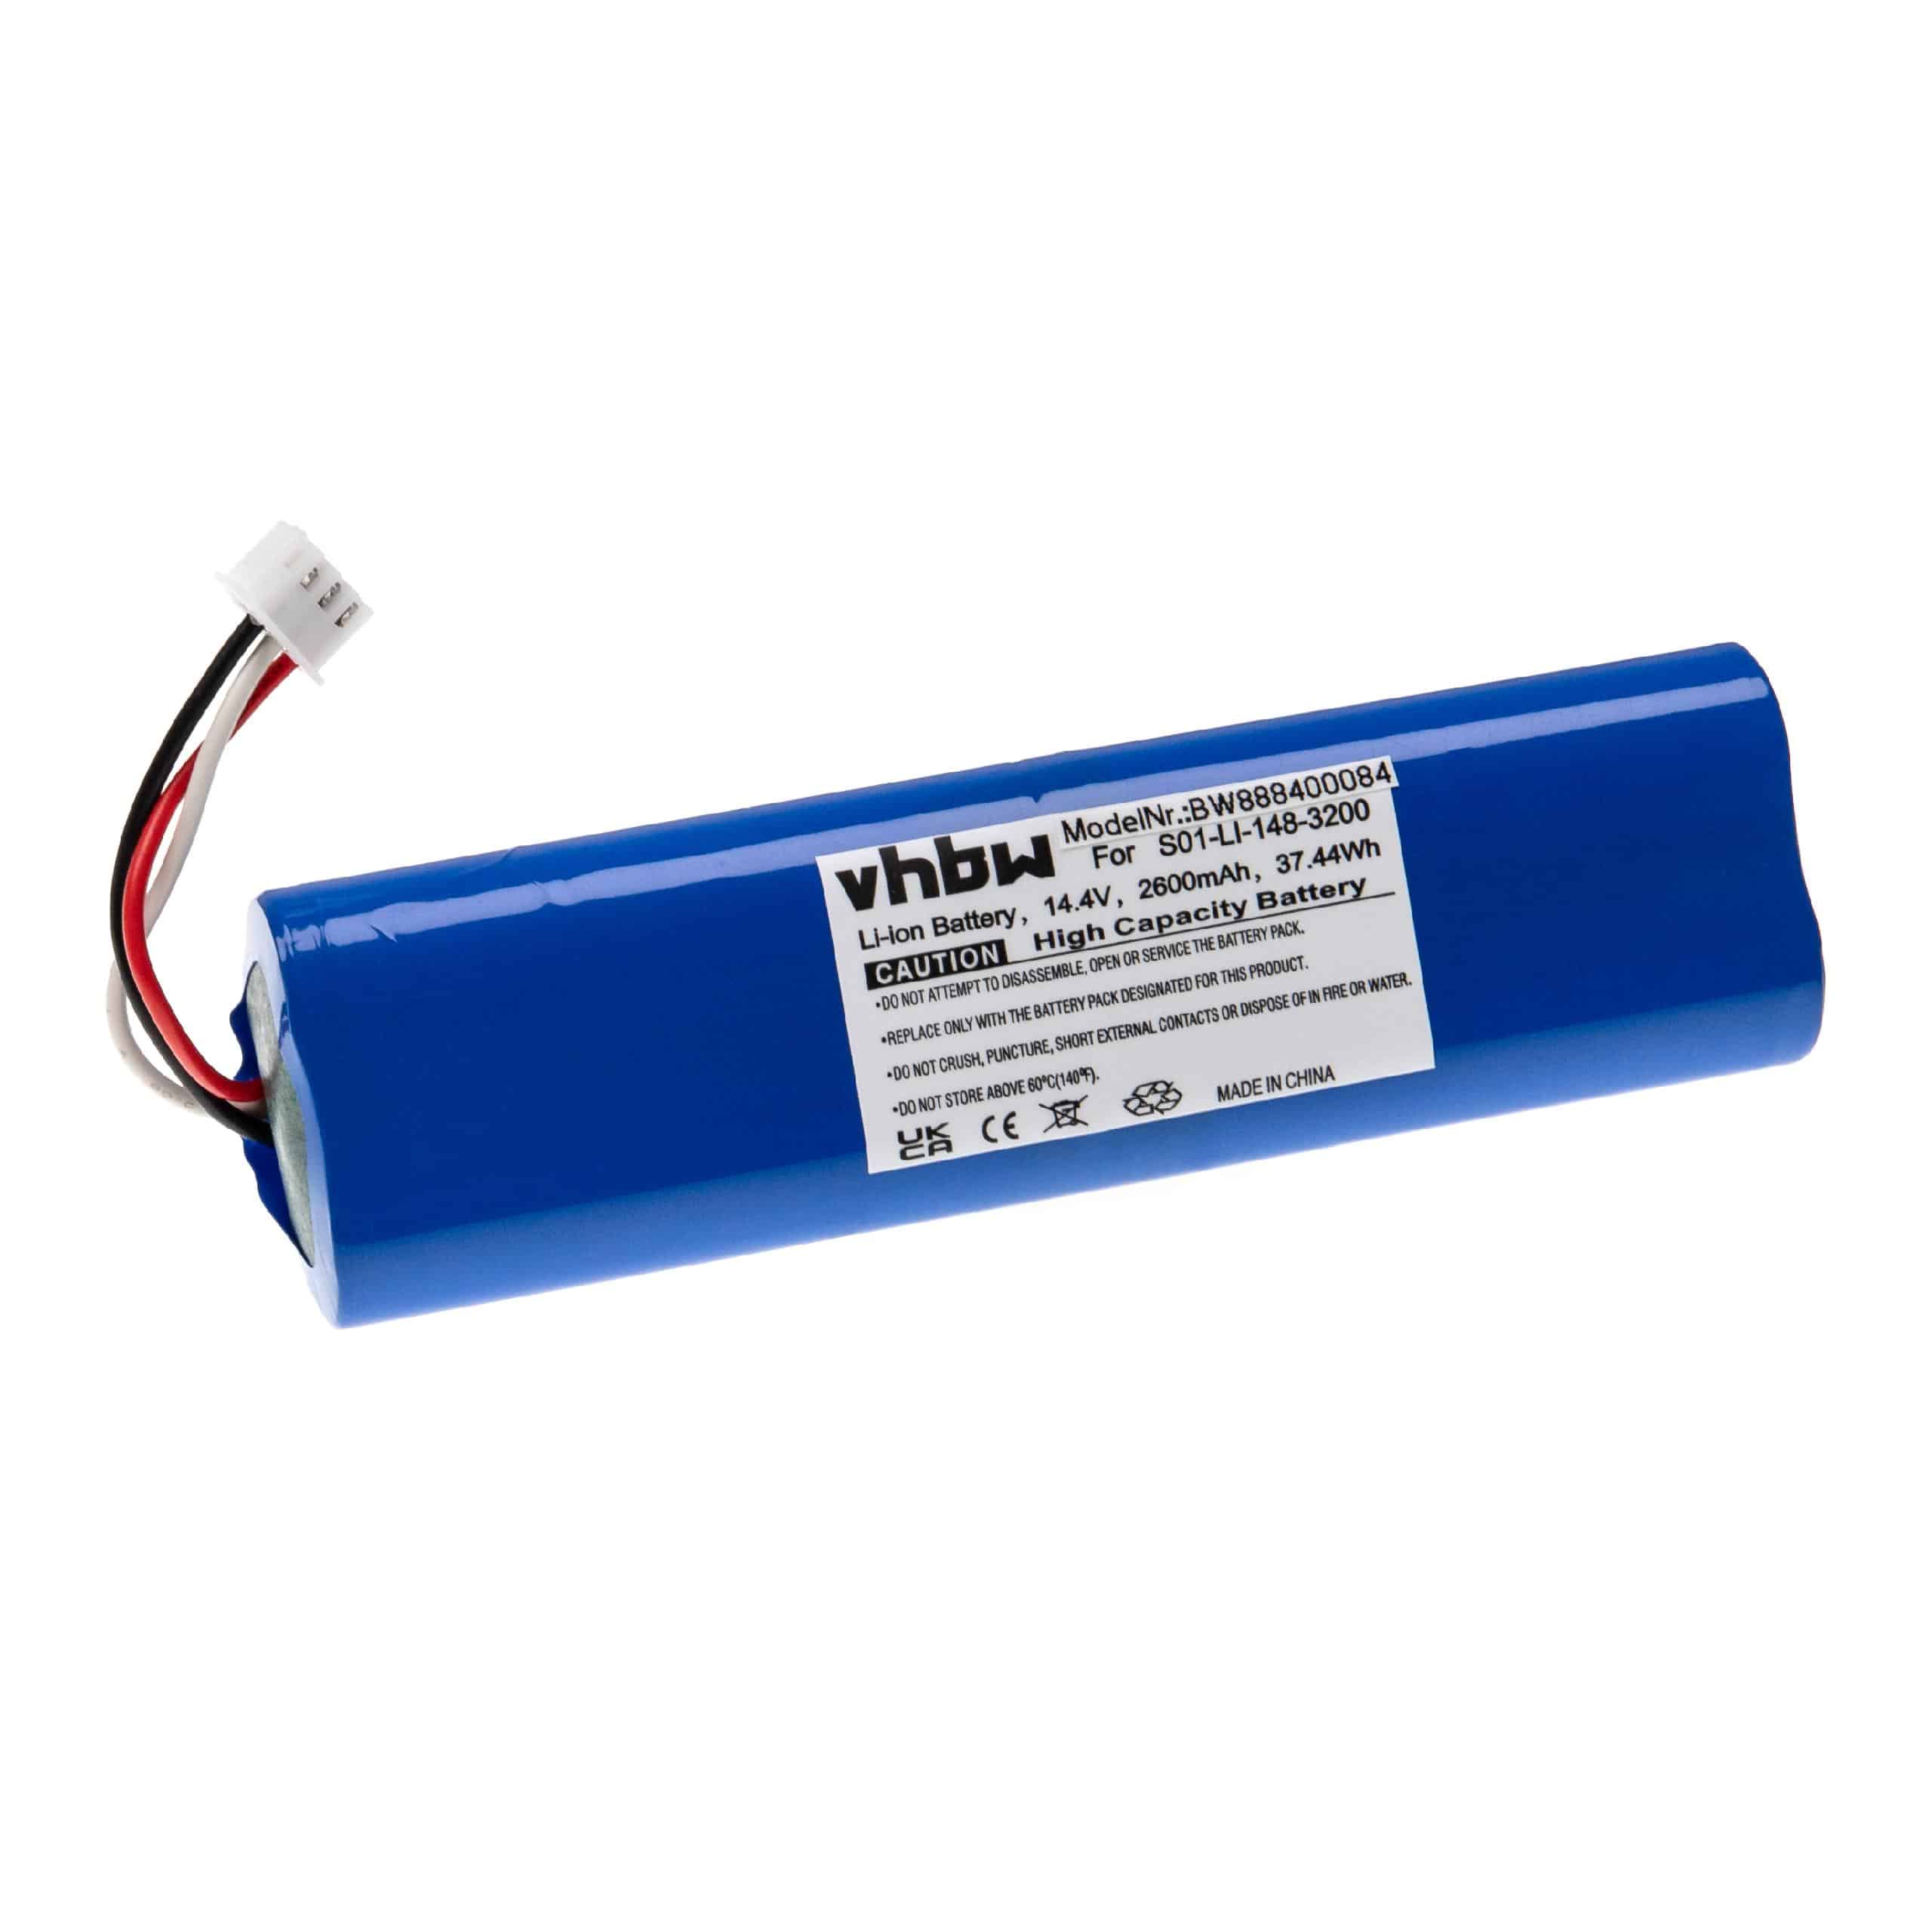 Battery Replacement for Ecovacs S01-LI-148-2600, S01-LI-148-3400, S01-LI-148-3200 for - 2600mAh, 14.4V, Li-ion